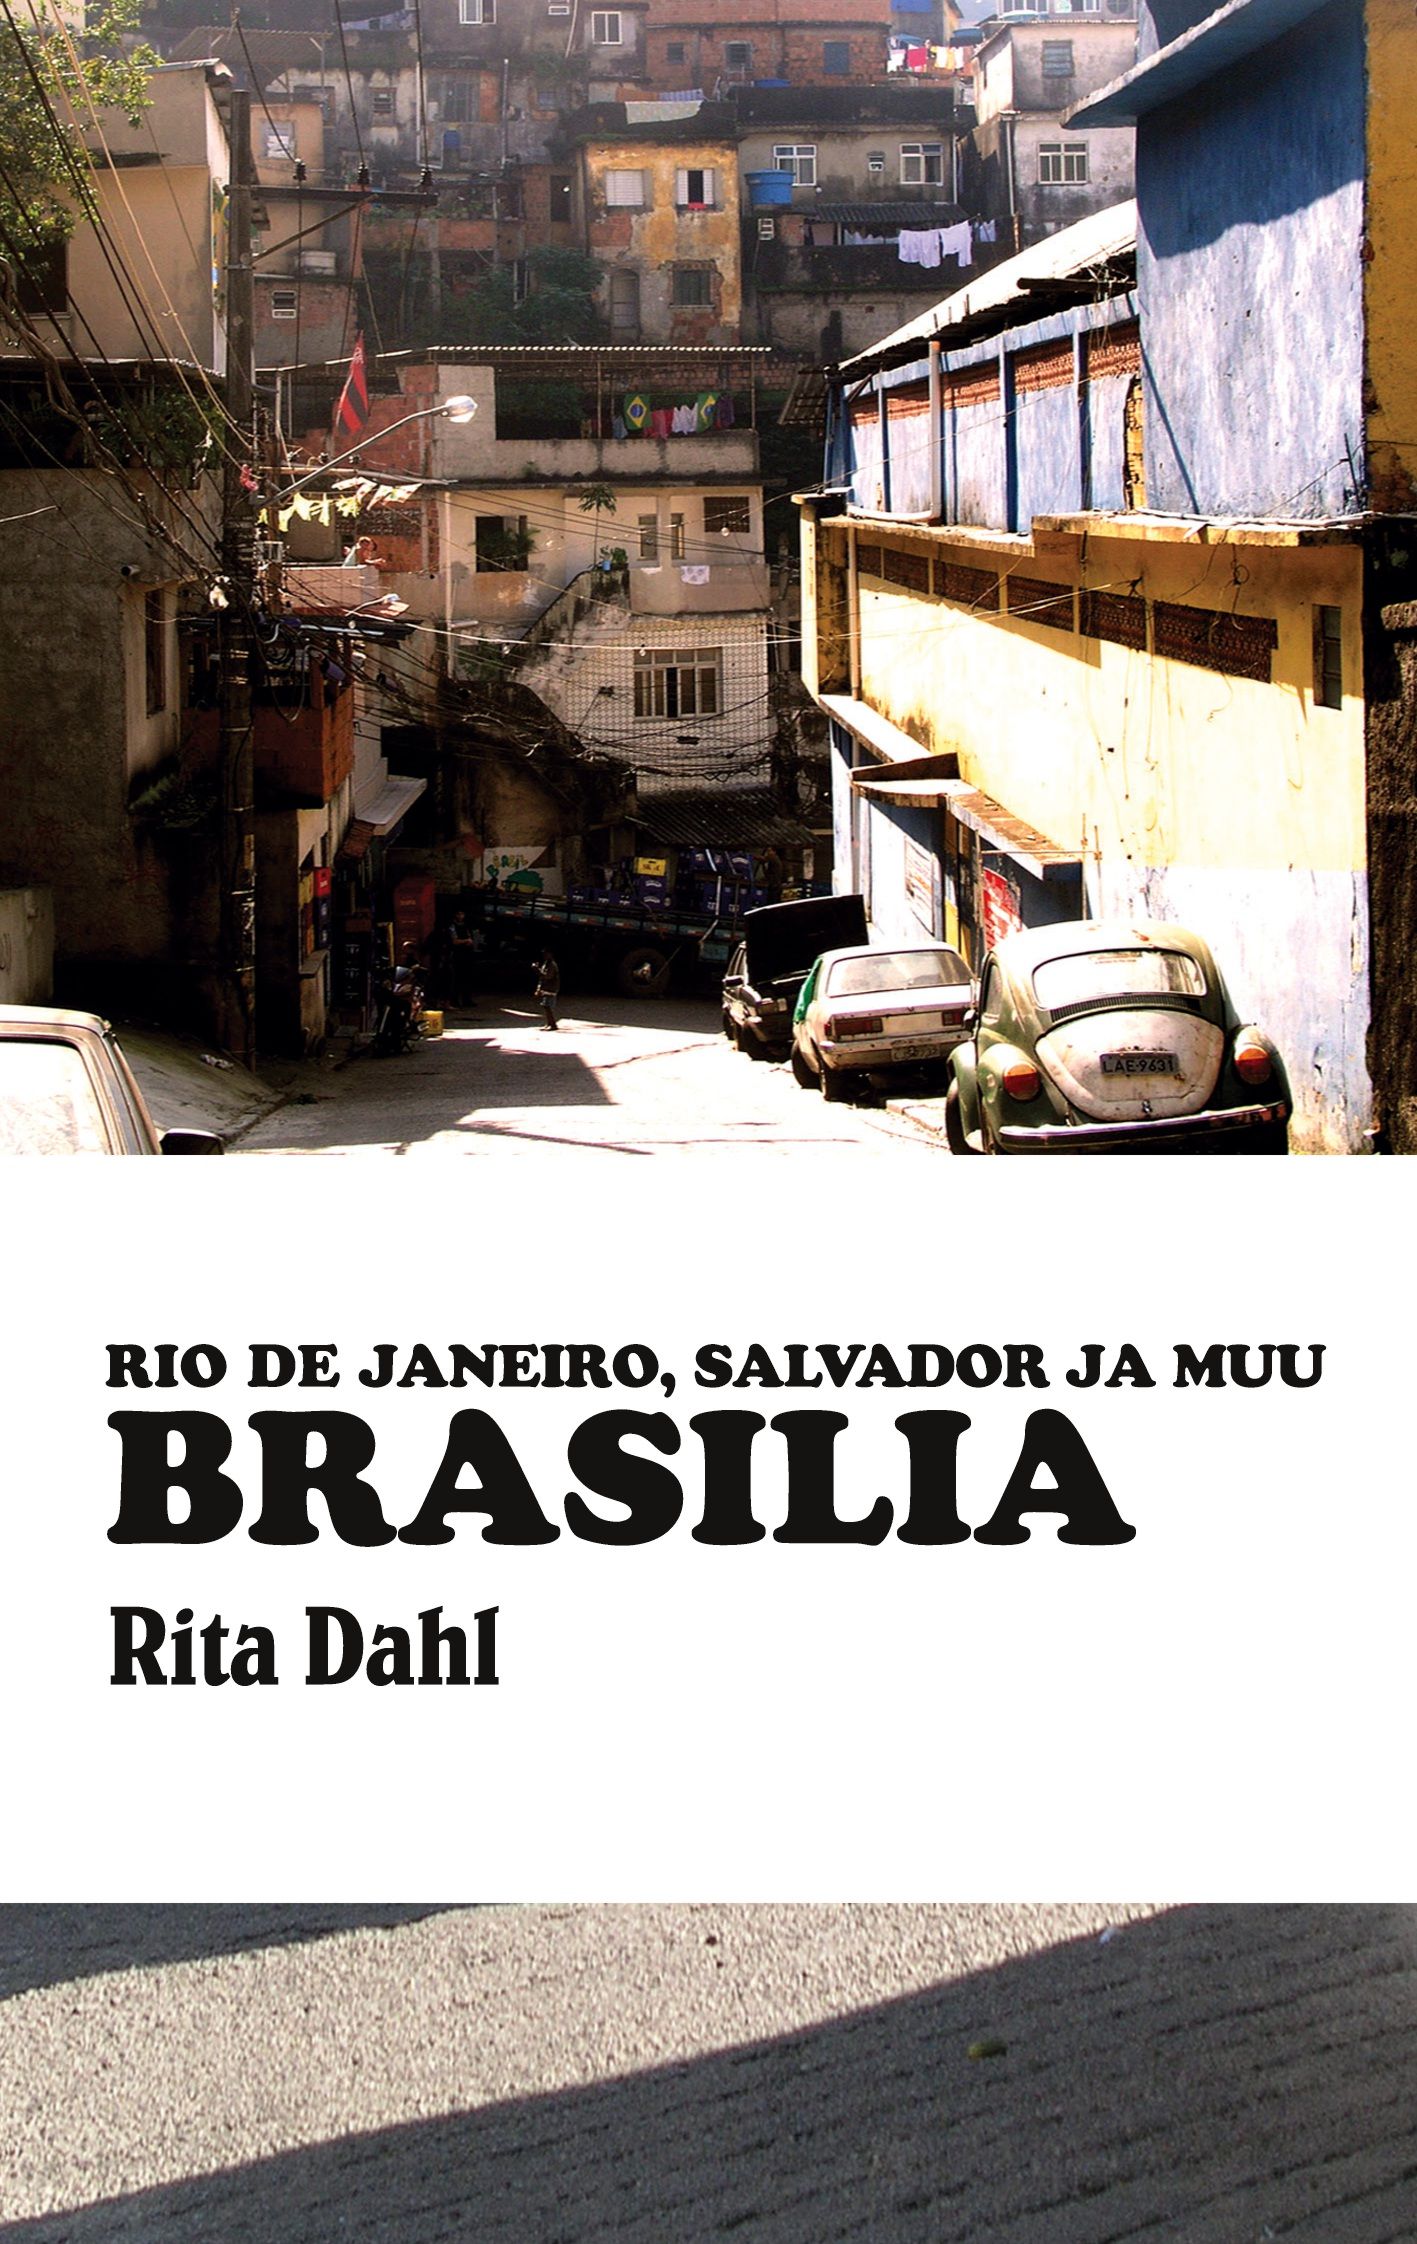 Rita Dahl : Brasilia